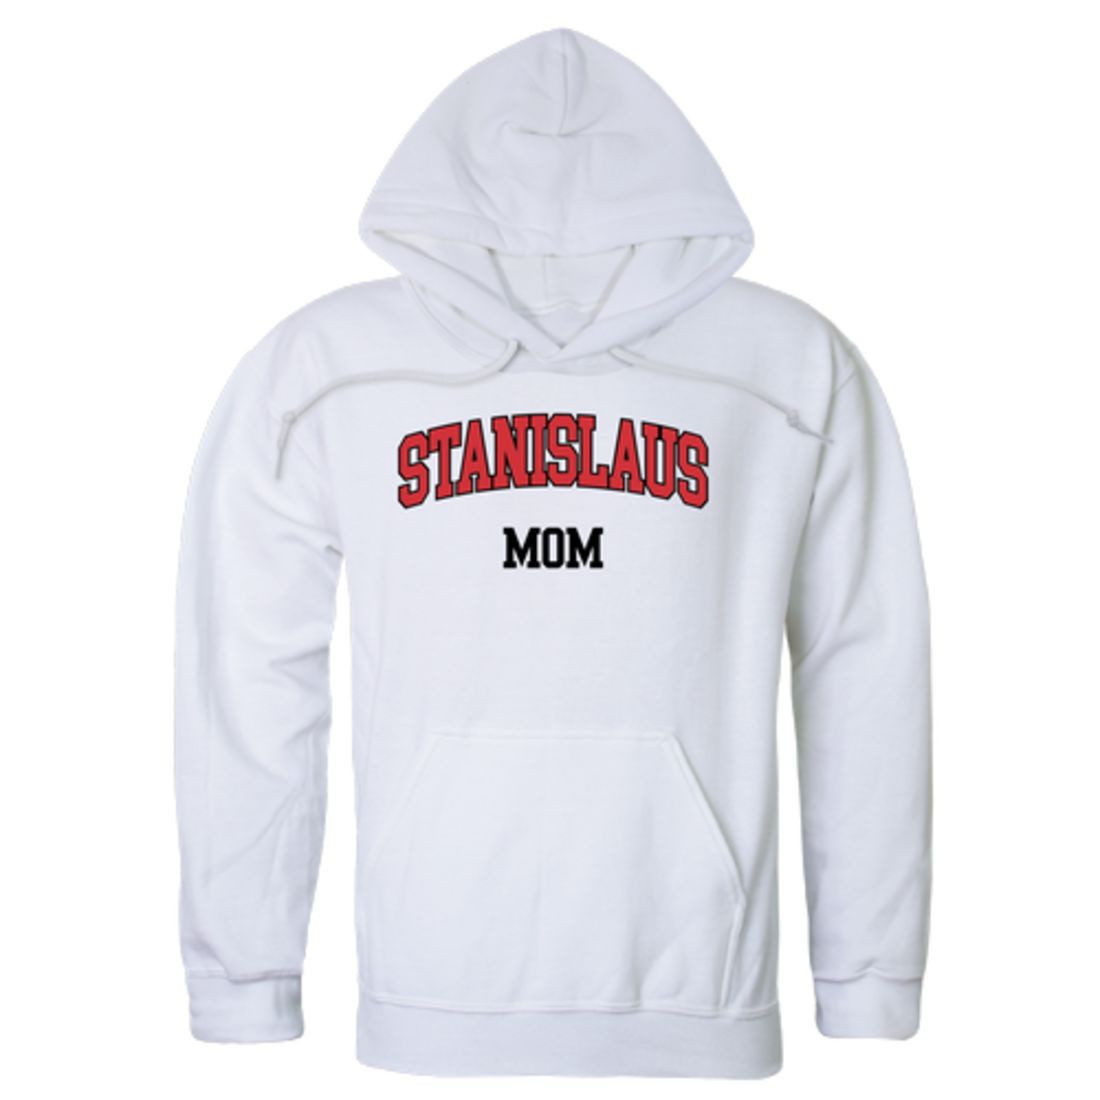 CSUSTAN California State University Stanislaus Warriors Mom Fleece Hoodie Sweatshirts Heather Grey-Campus-Wardrobe